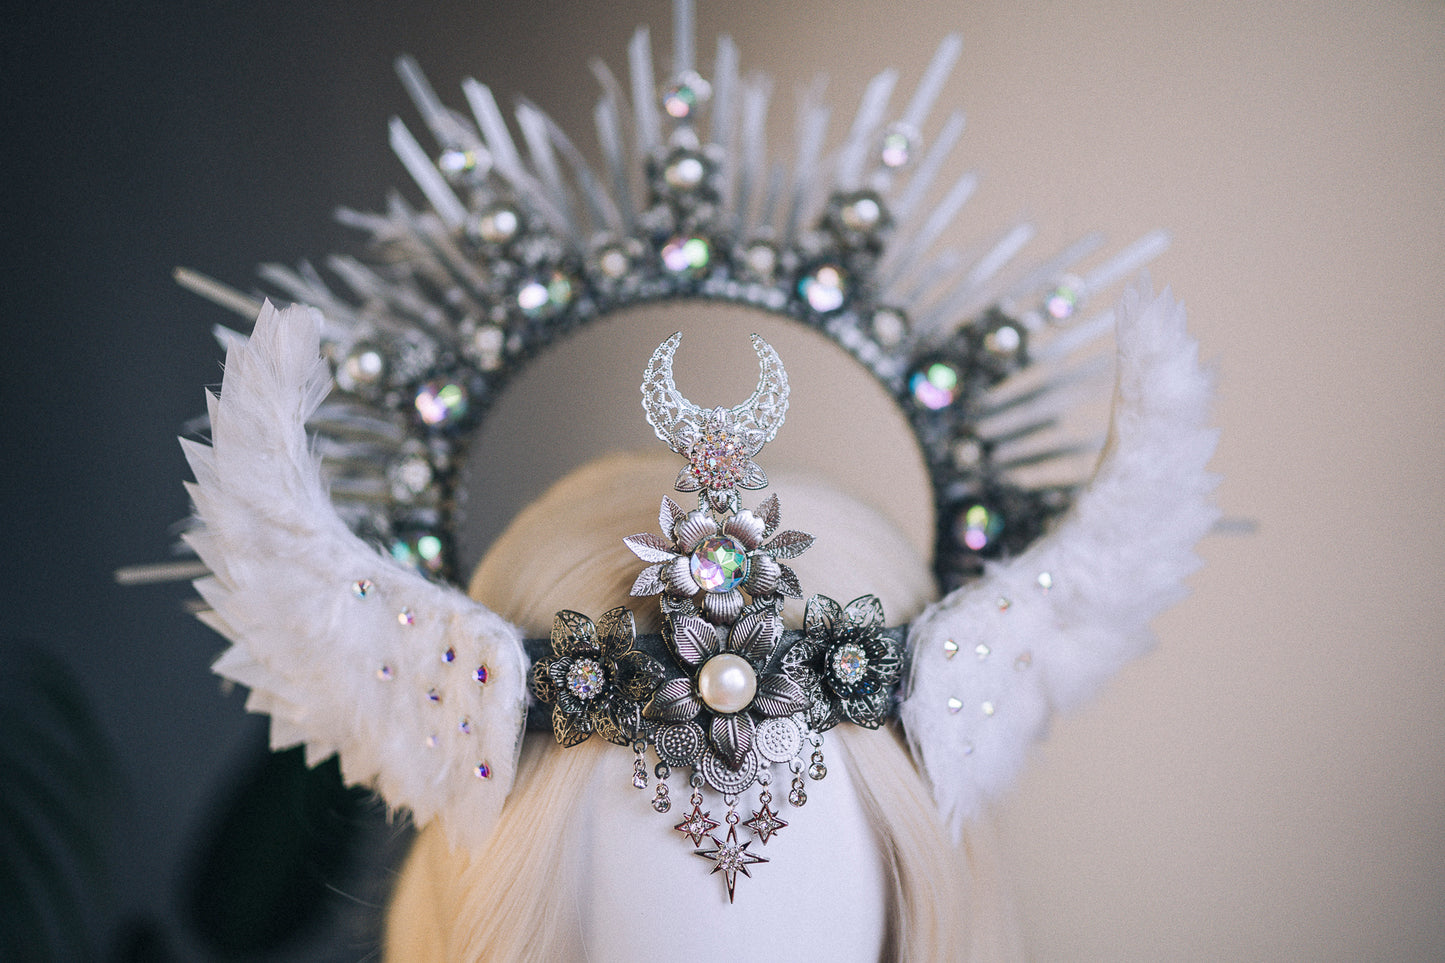 Angel Crown Silver White Headpiece